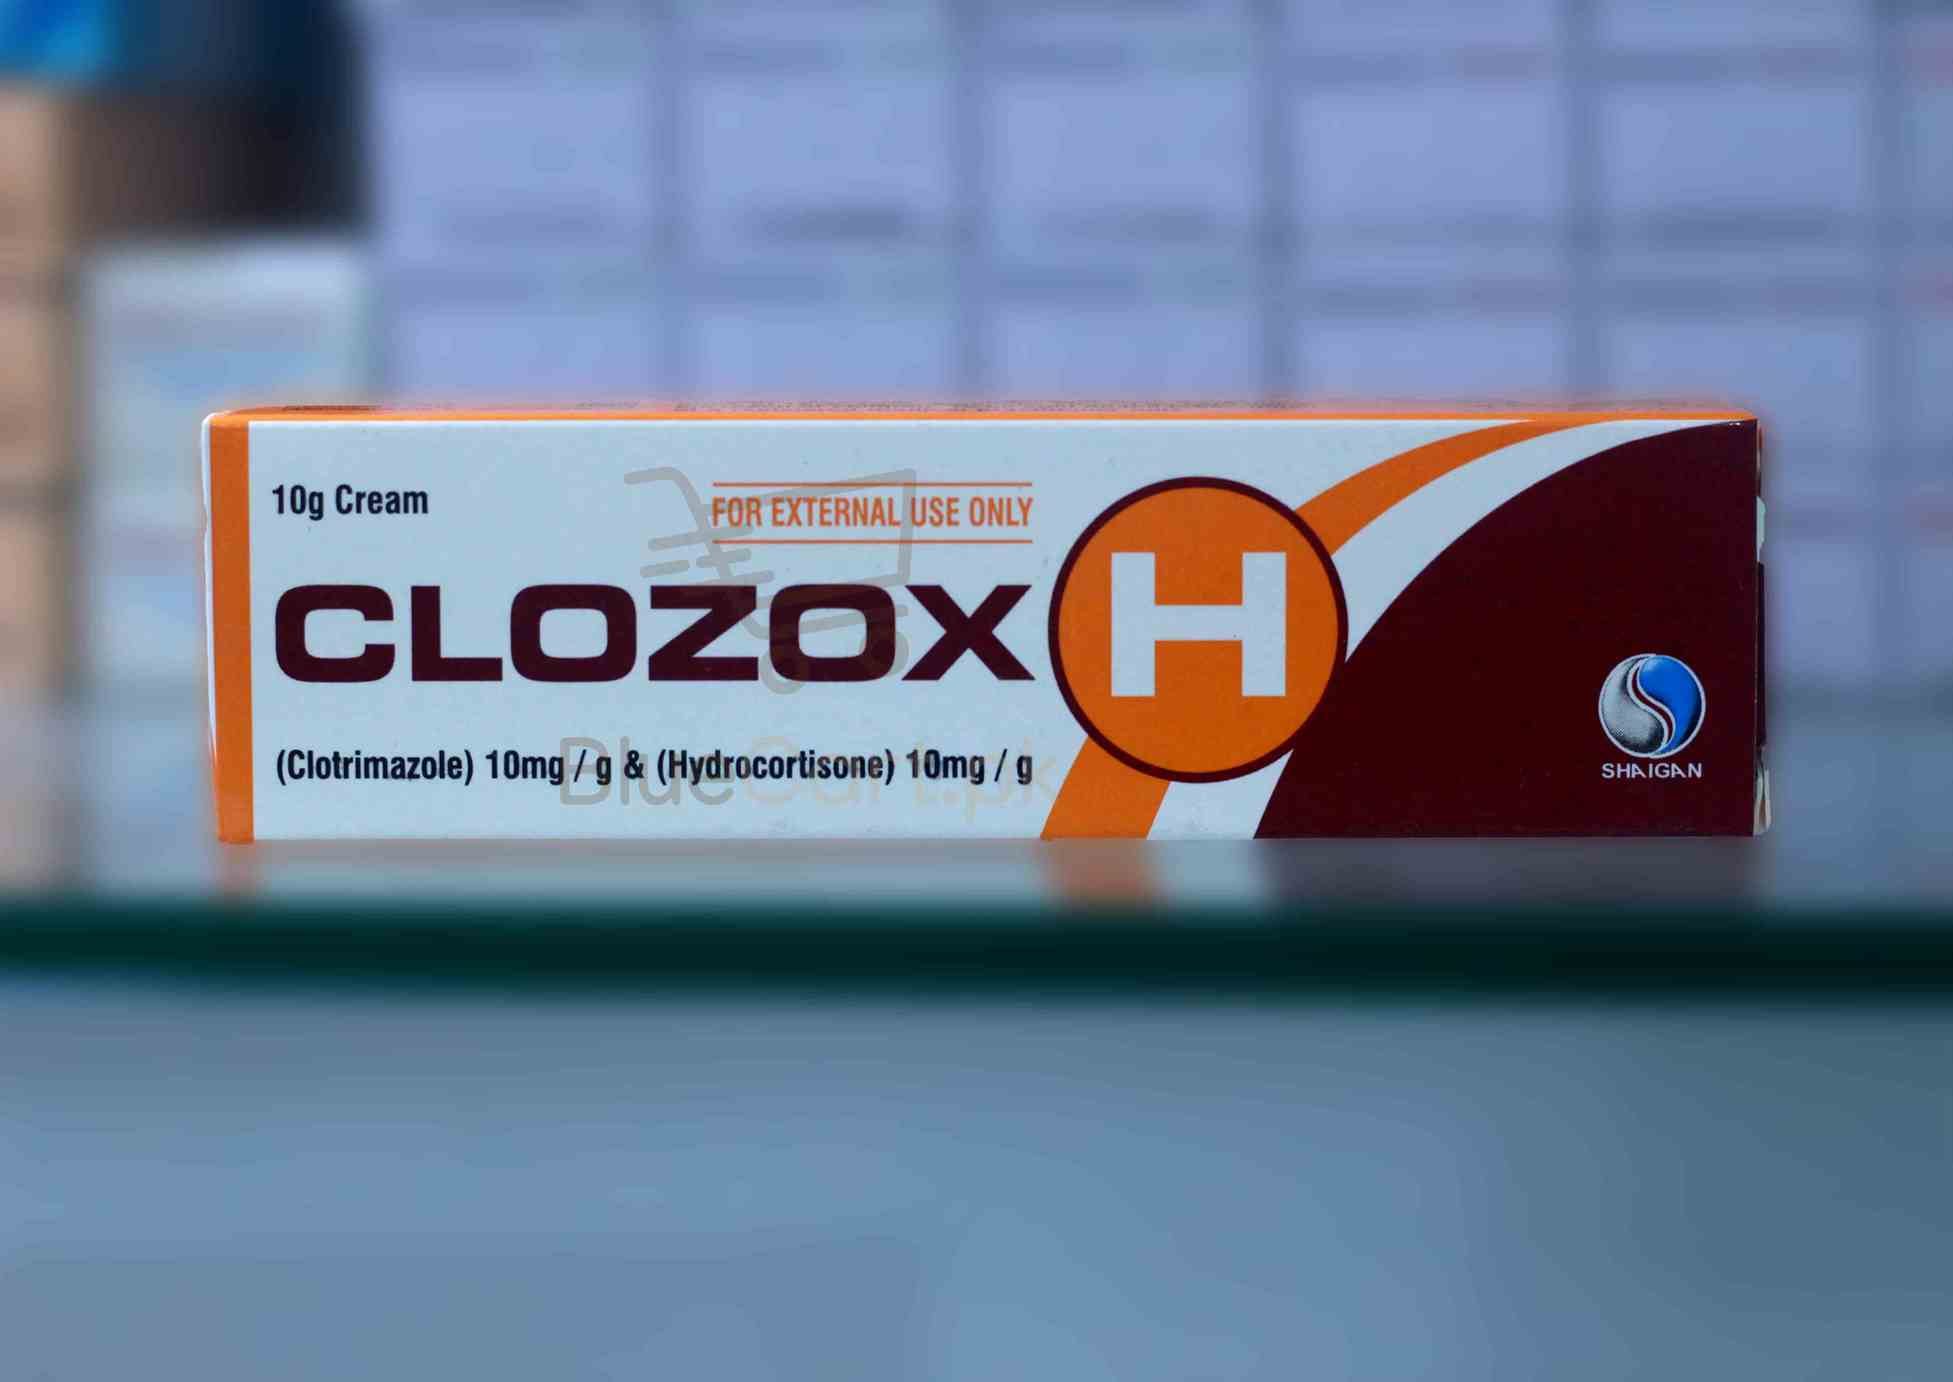 Clozox H Cream